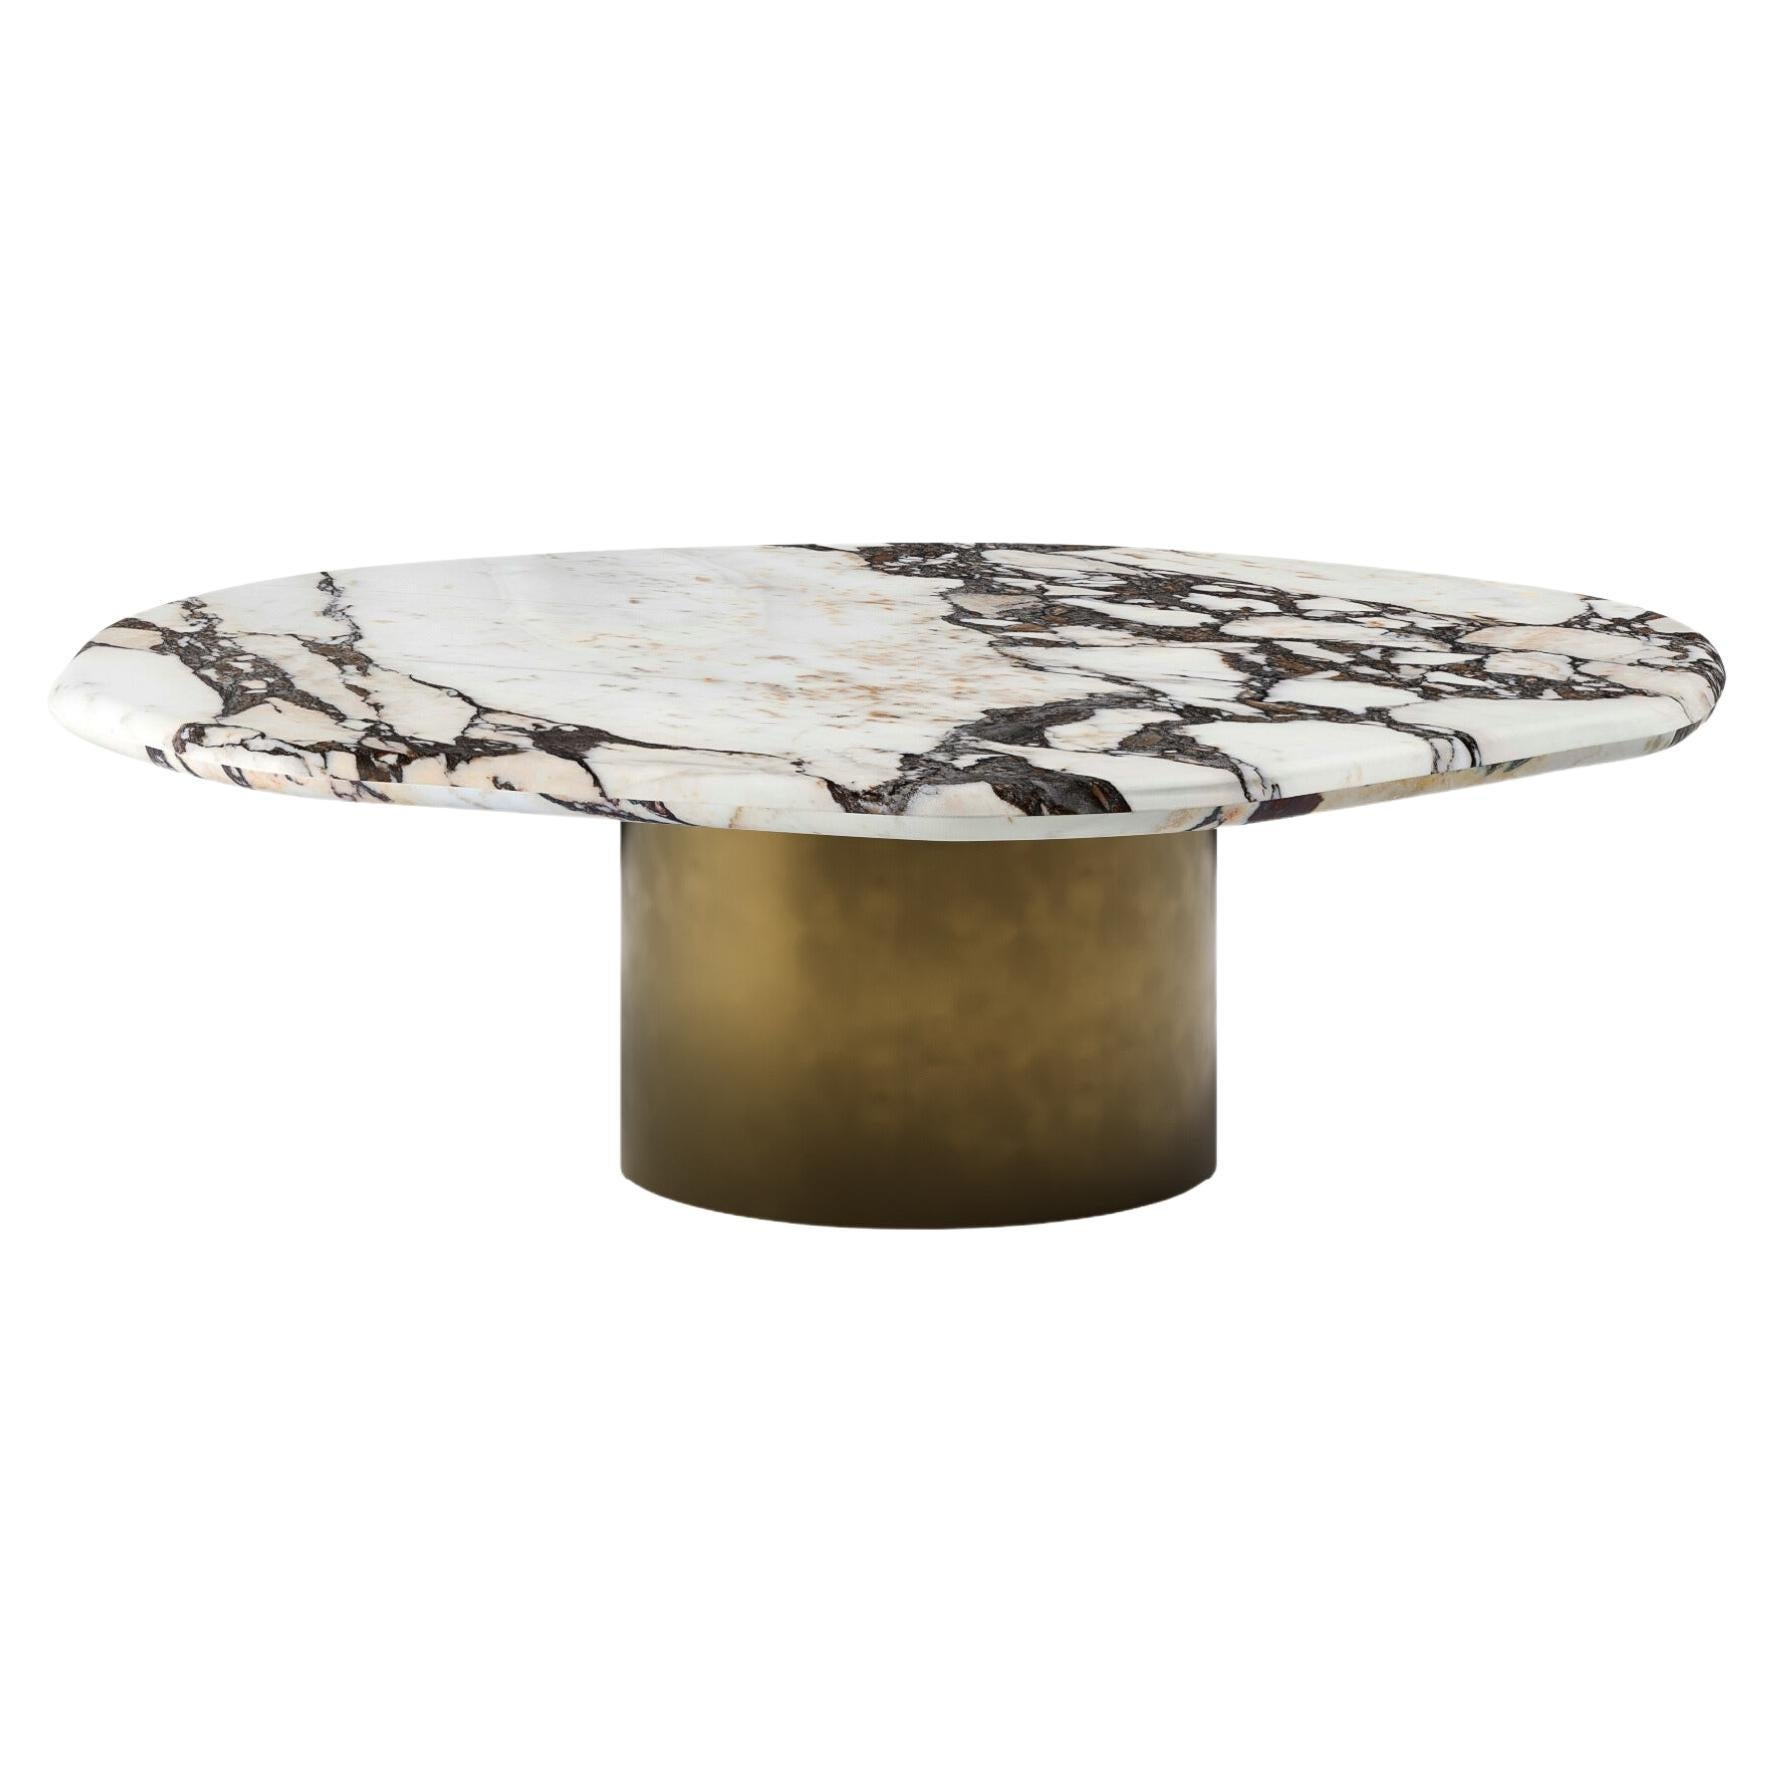 FORM(LA) Lago Round Coffee Table 42”L x 42”W x 14”H Viola Marble & Bronze For Sale